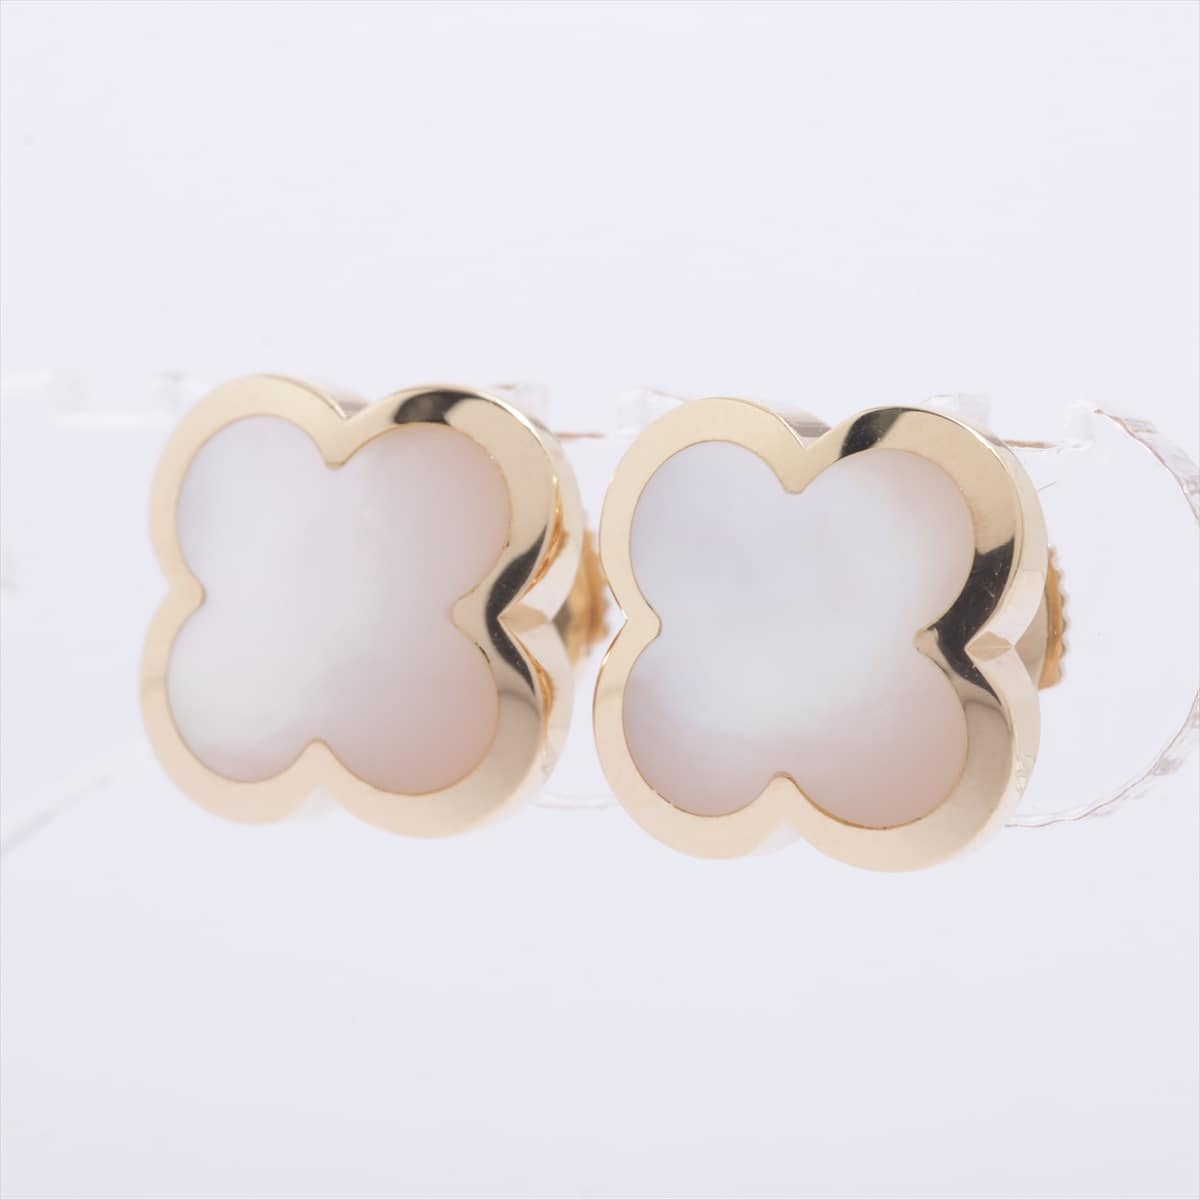 Van Cleef & Arpels Pure Alhambra shells Piercing jewelry 750 YG 3.8g